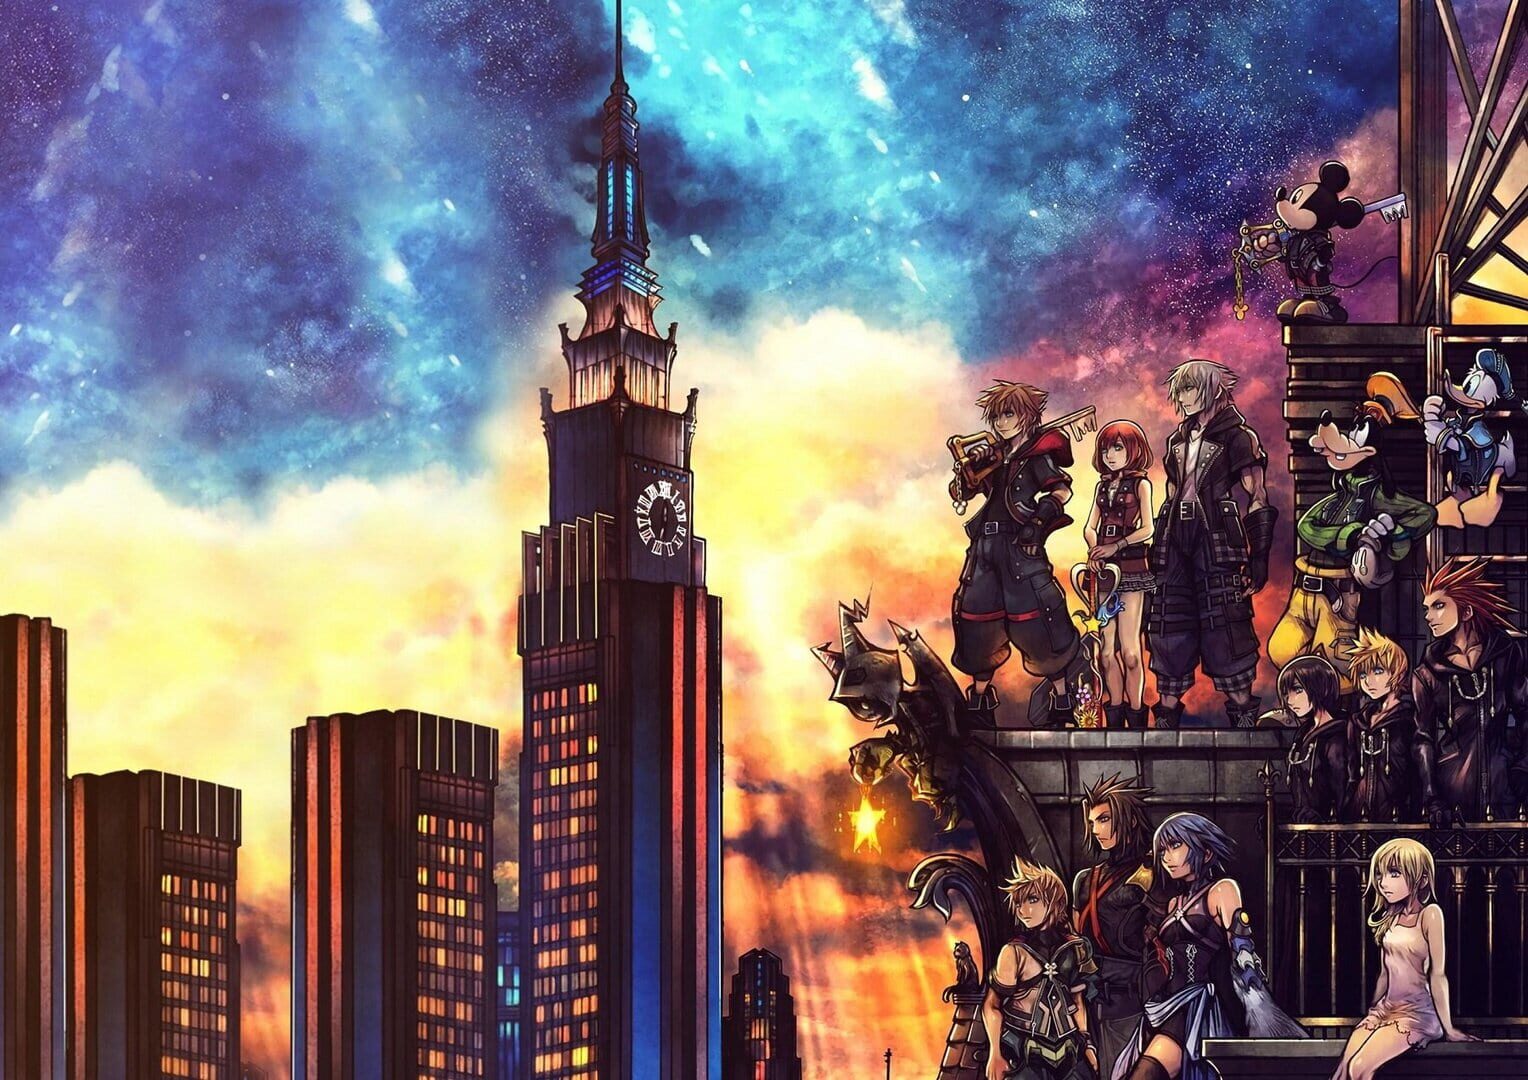 Arte - Kingdom Hearts III